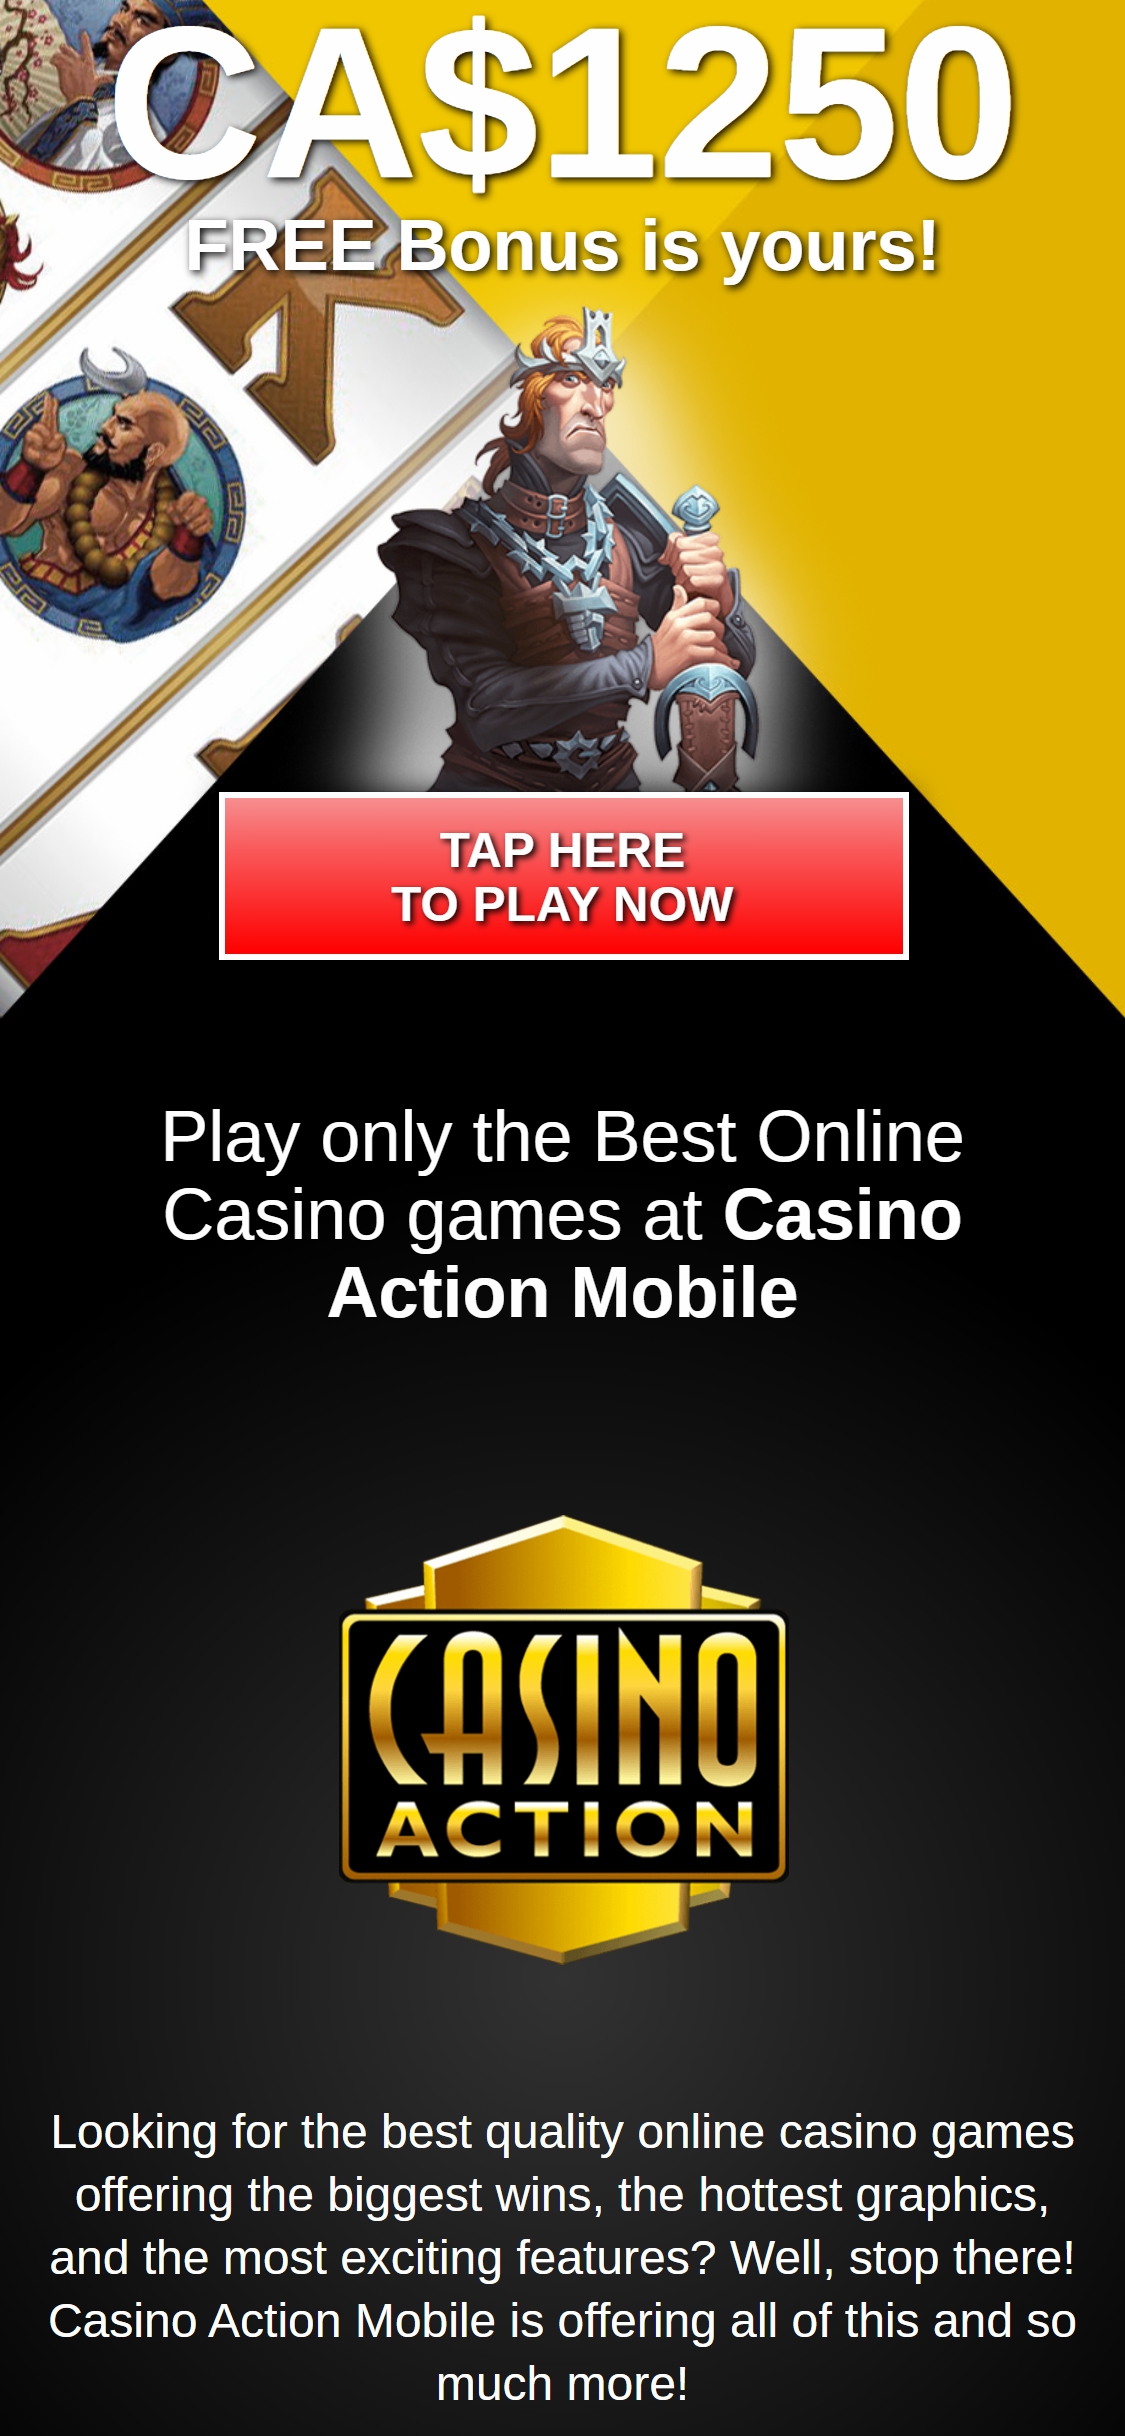 Casino Action Mobile No Deposit Bonus Review